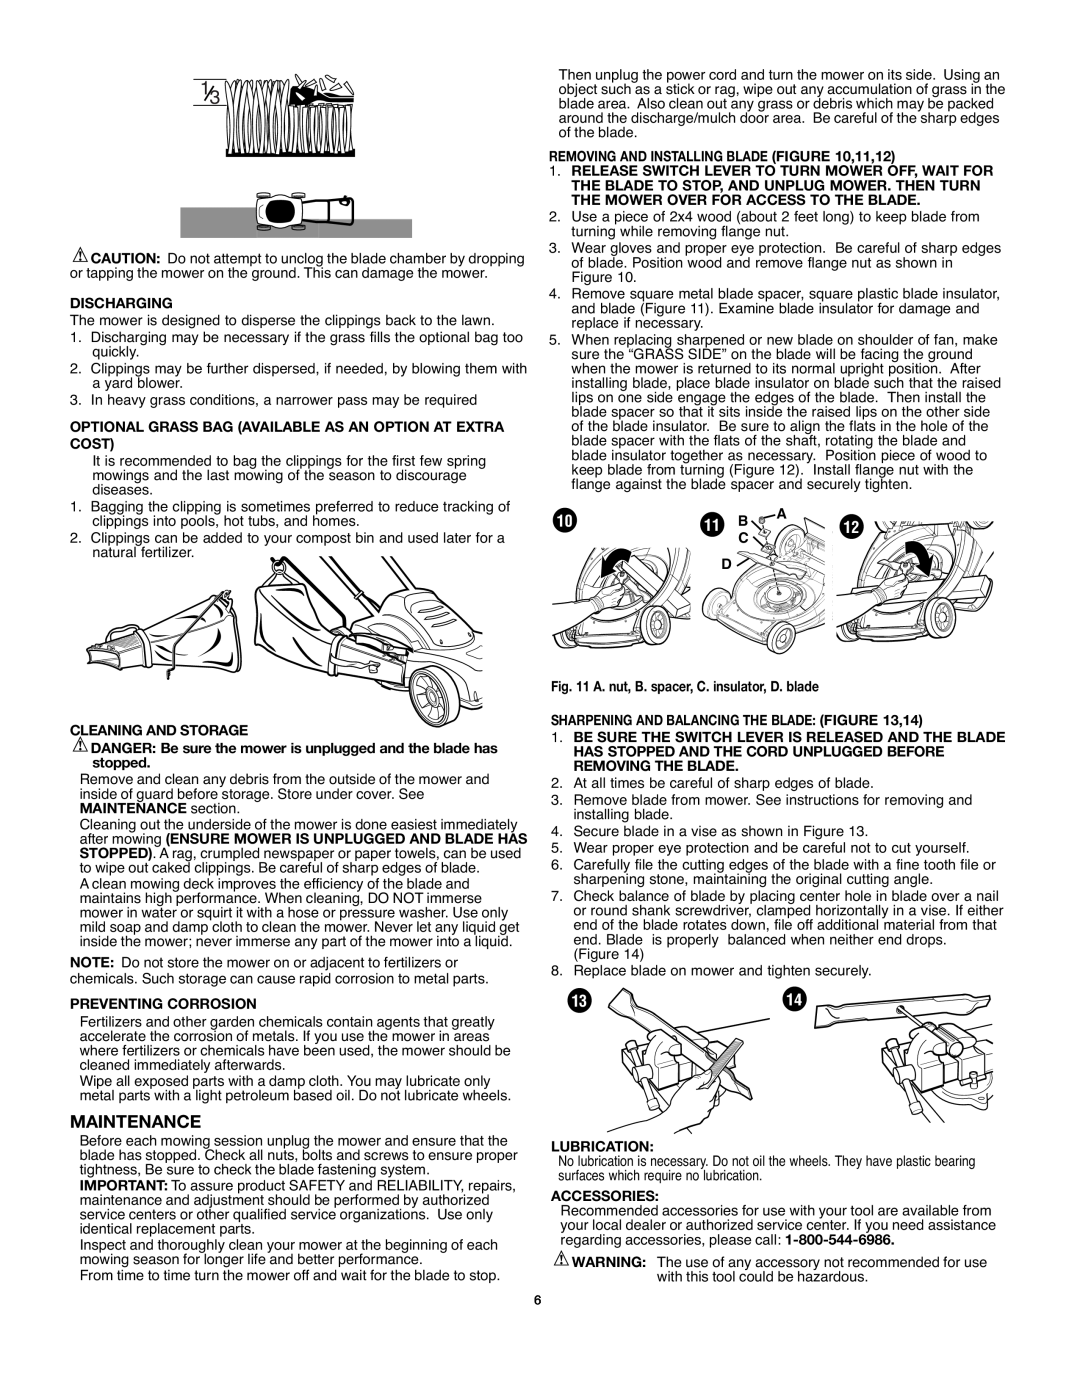 Black & Decker mm275 instruction manual Maintenance, 11 B 